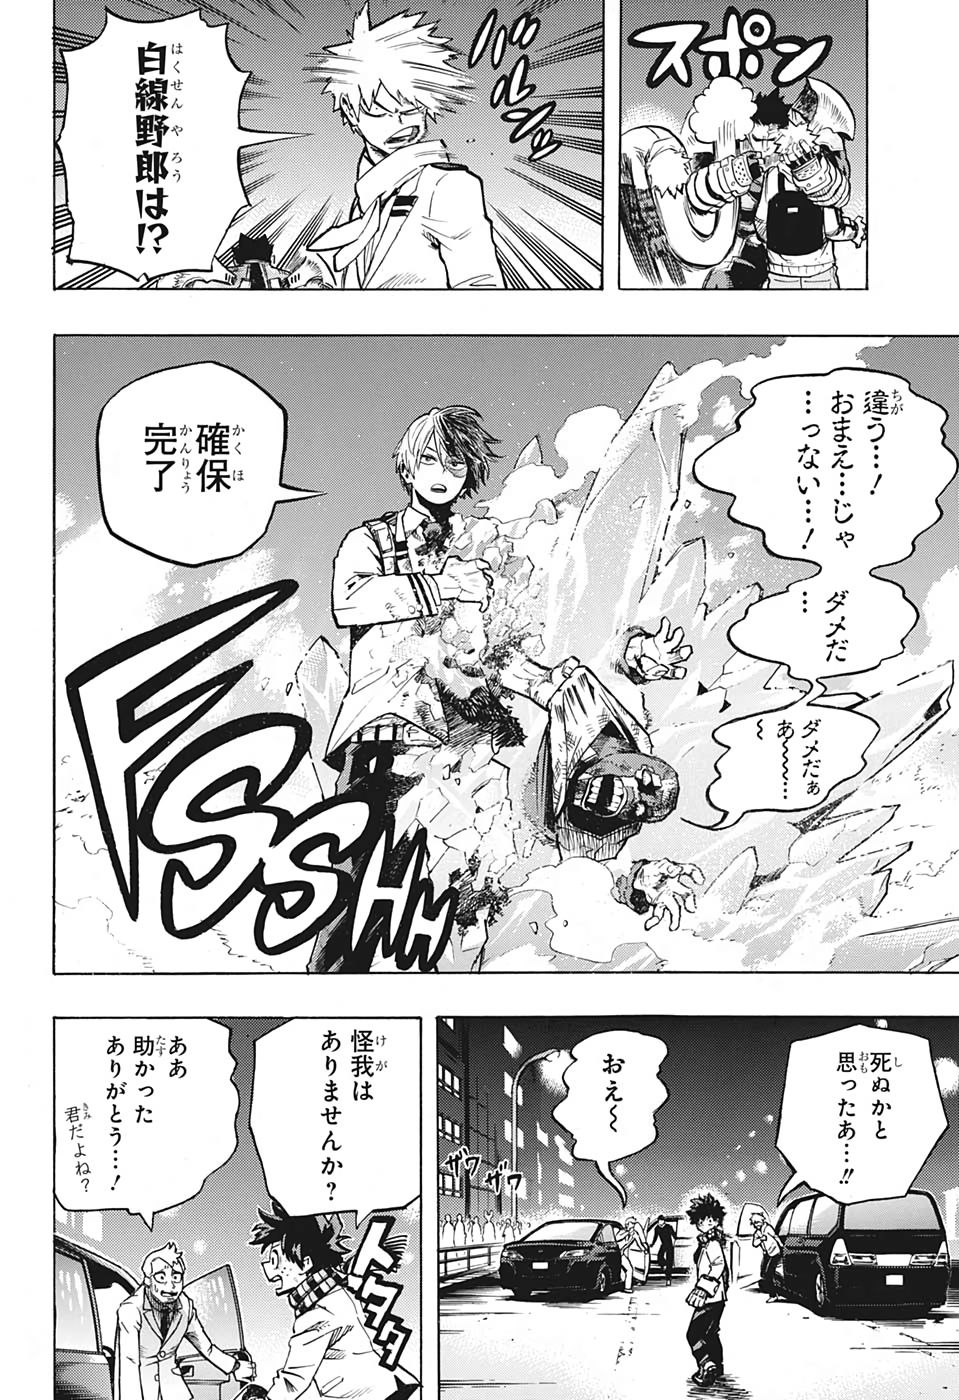 Boku no Hero Academia - Chapter 252 - Page 2